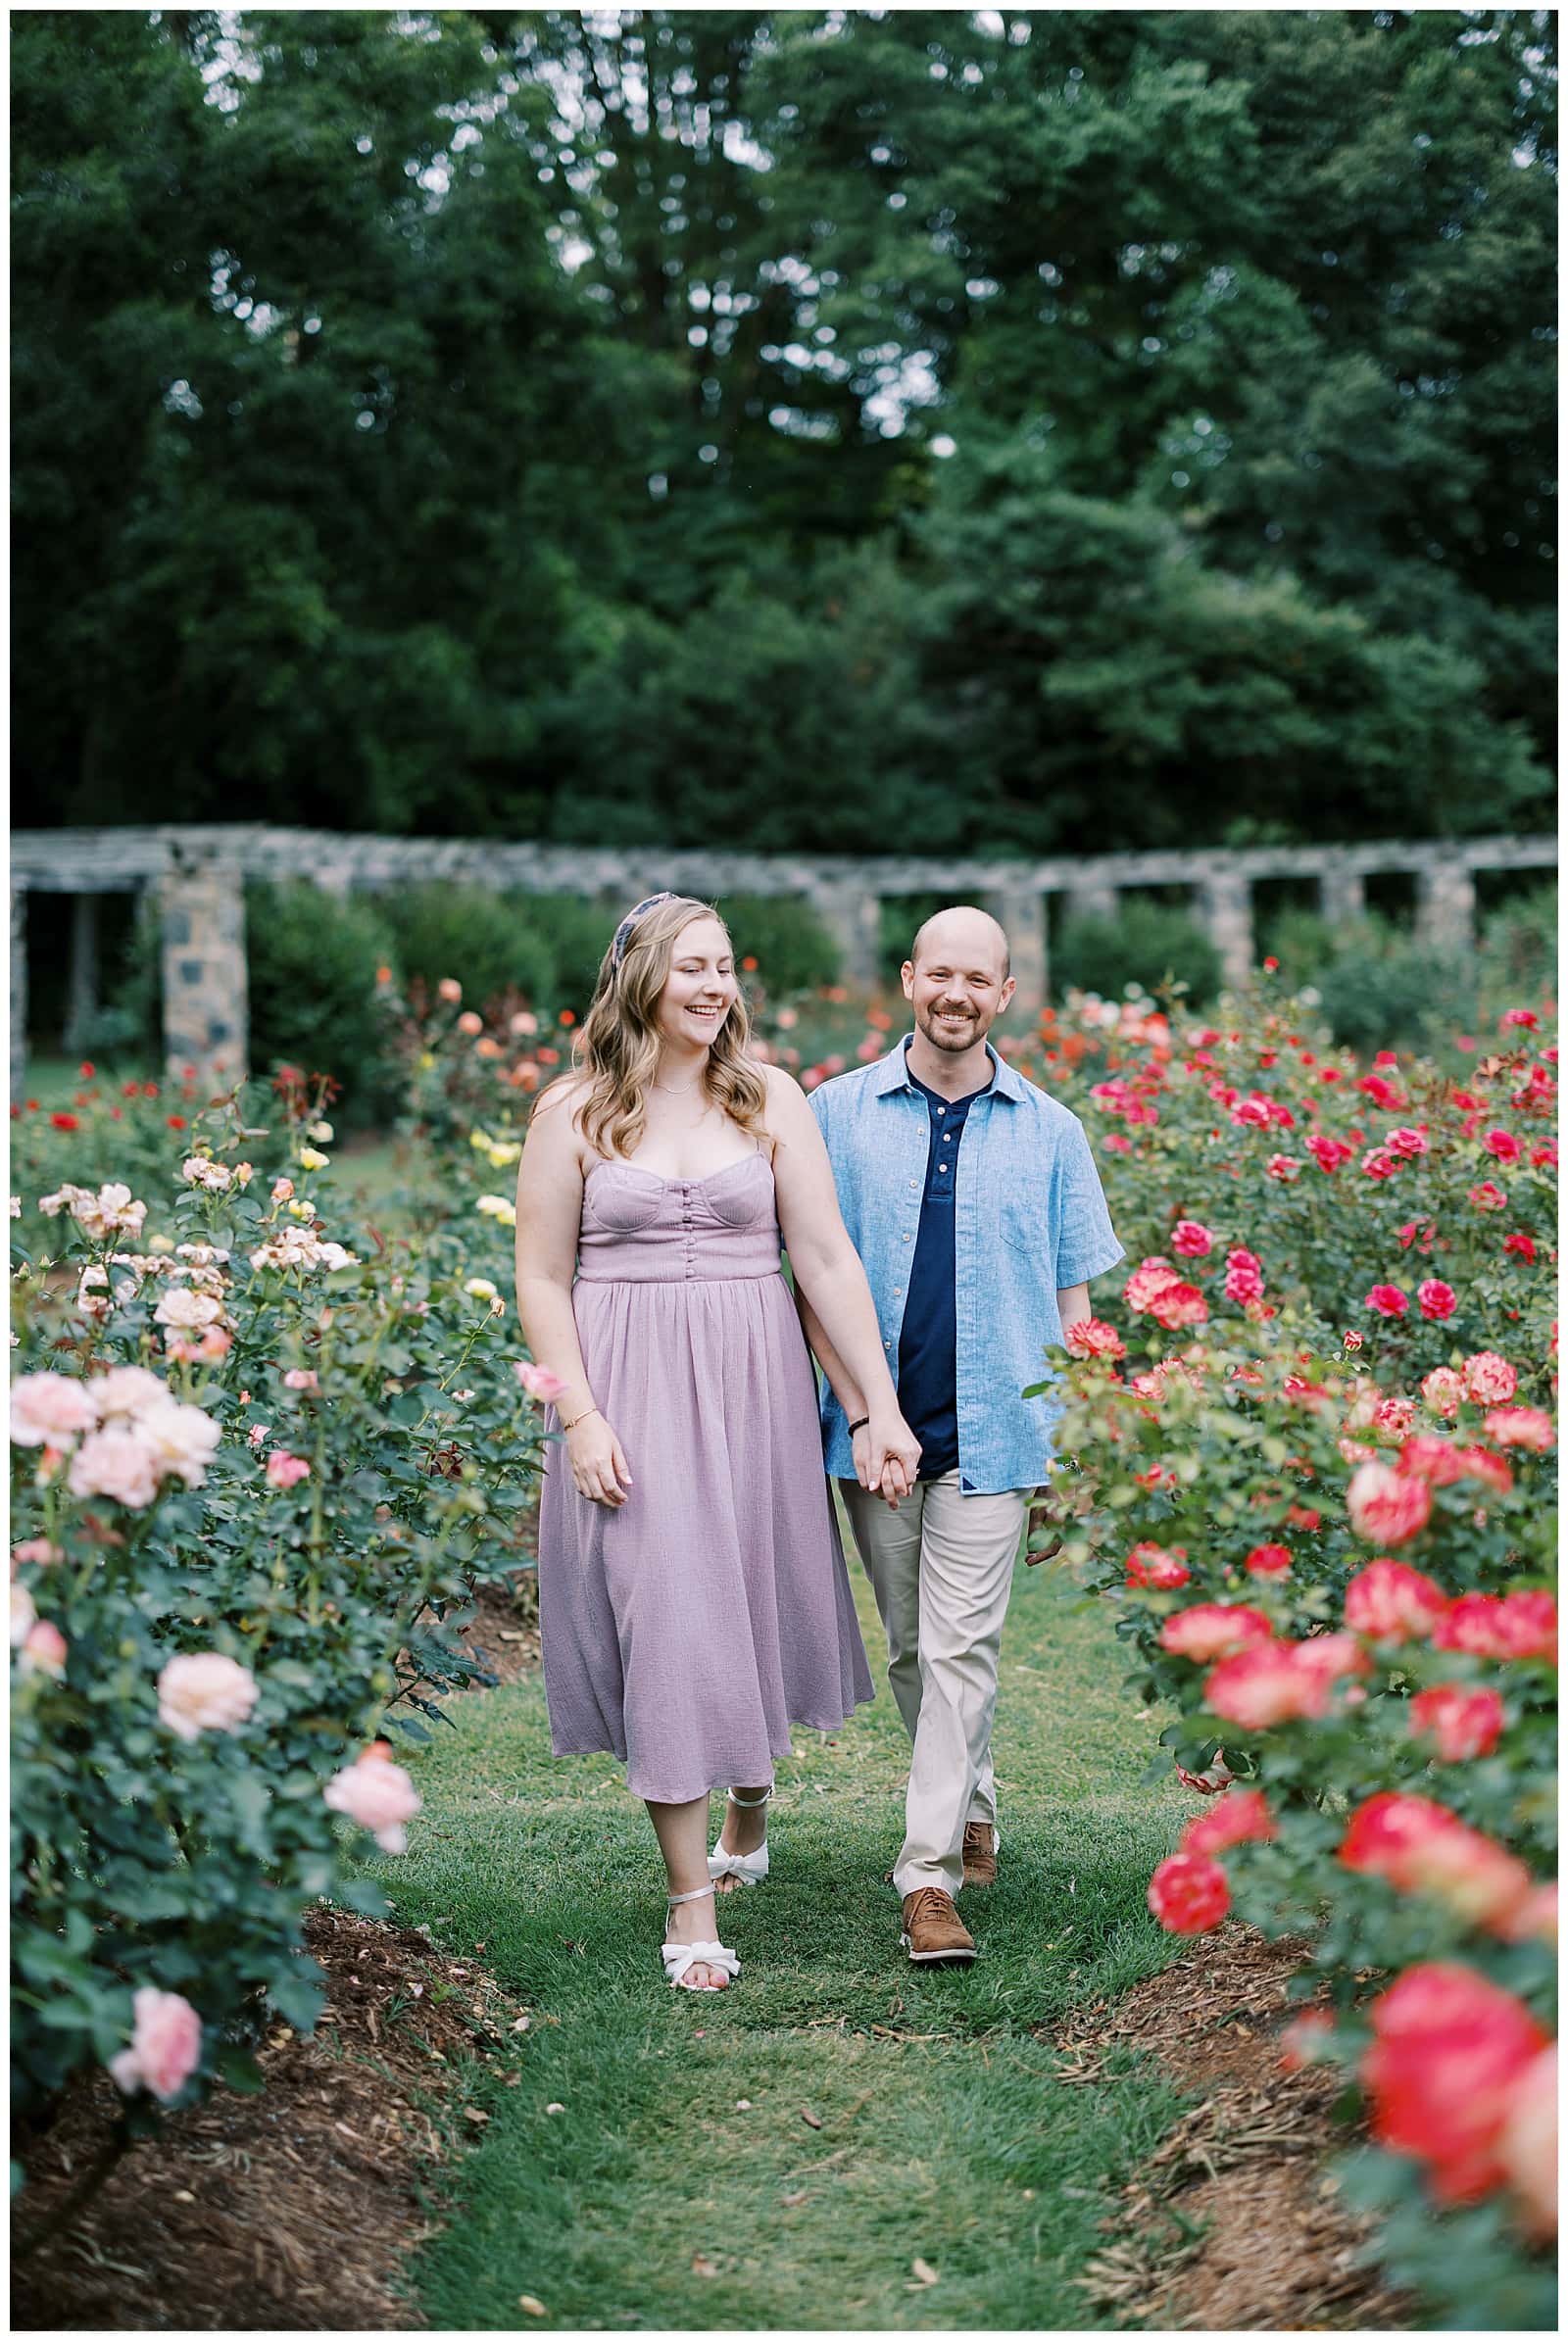 Danielle-Defayette-Photography-Raleigh-Rose-Garden-Engagement-Photos_0012.jpg